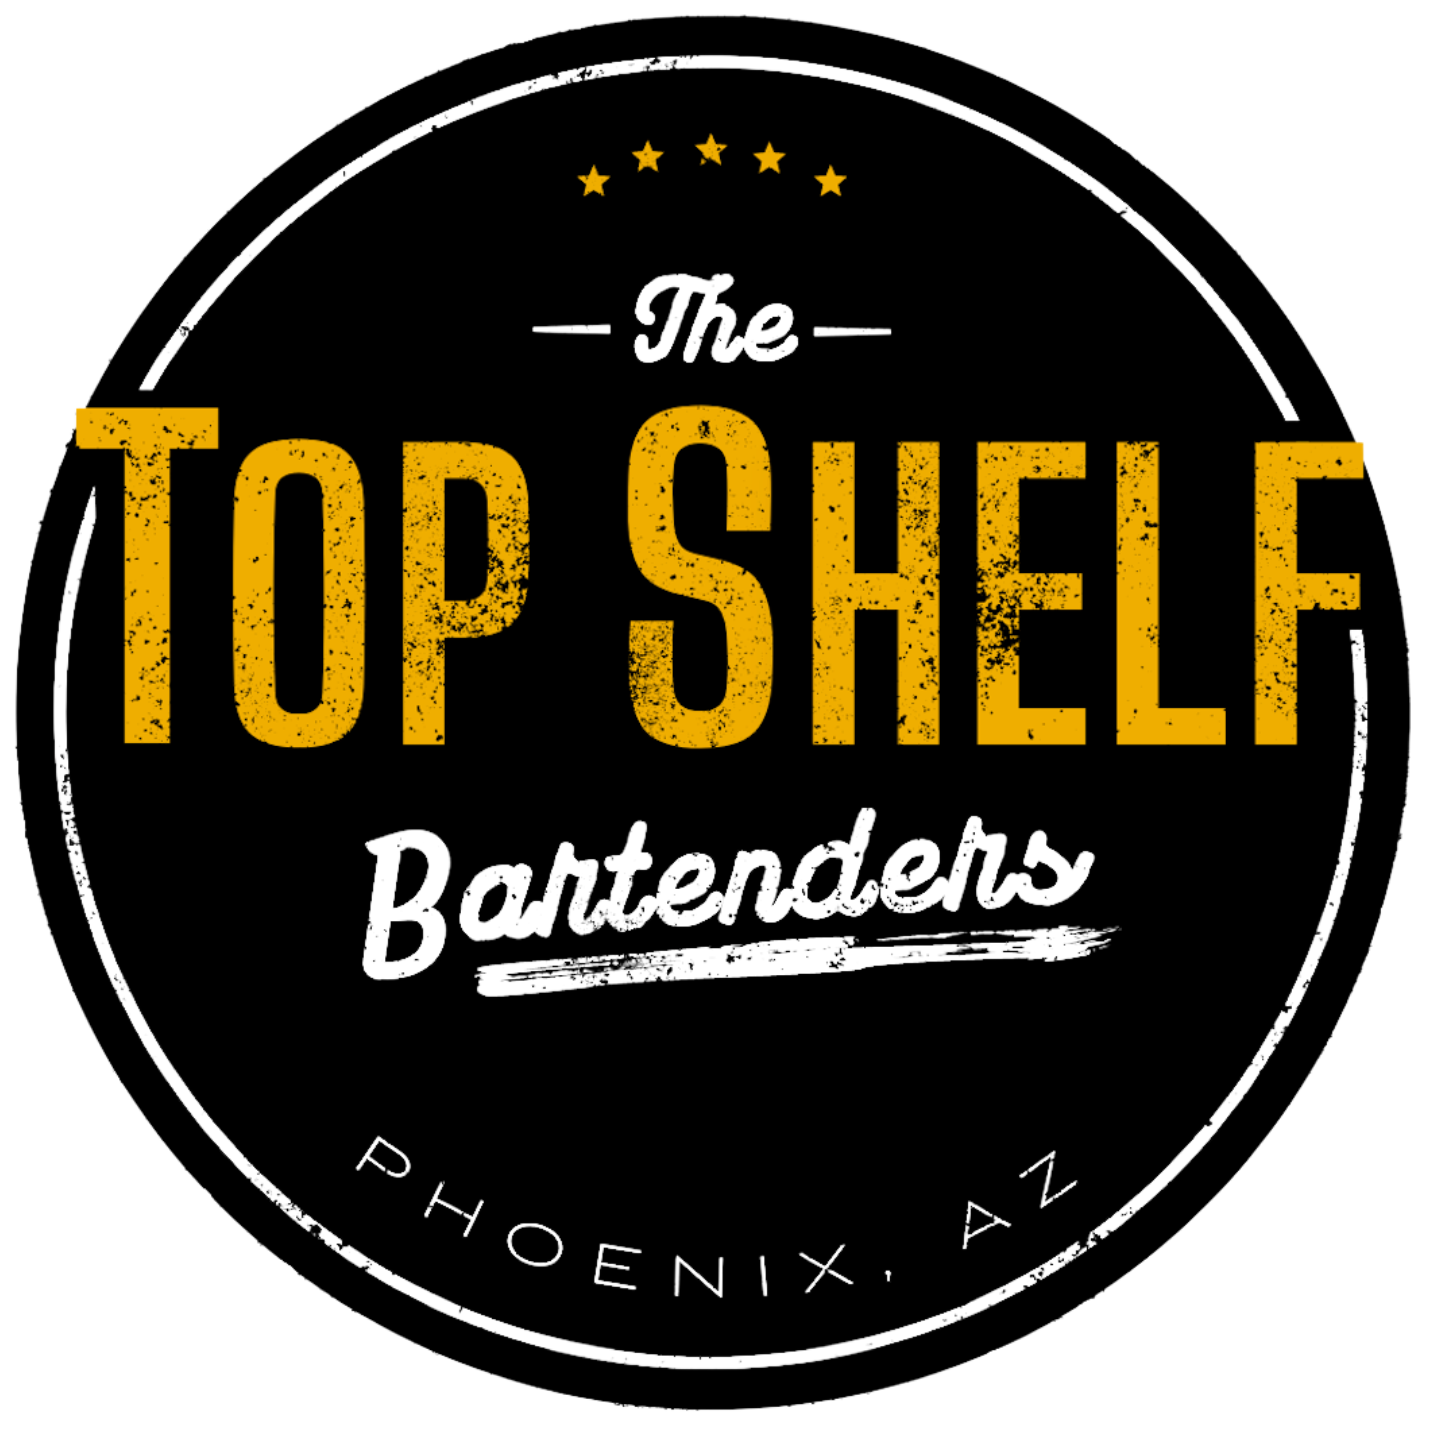 The Top Shelf Bartenders